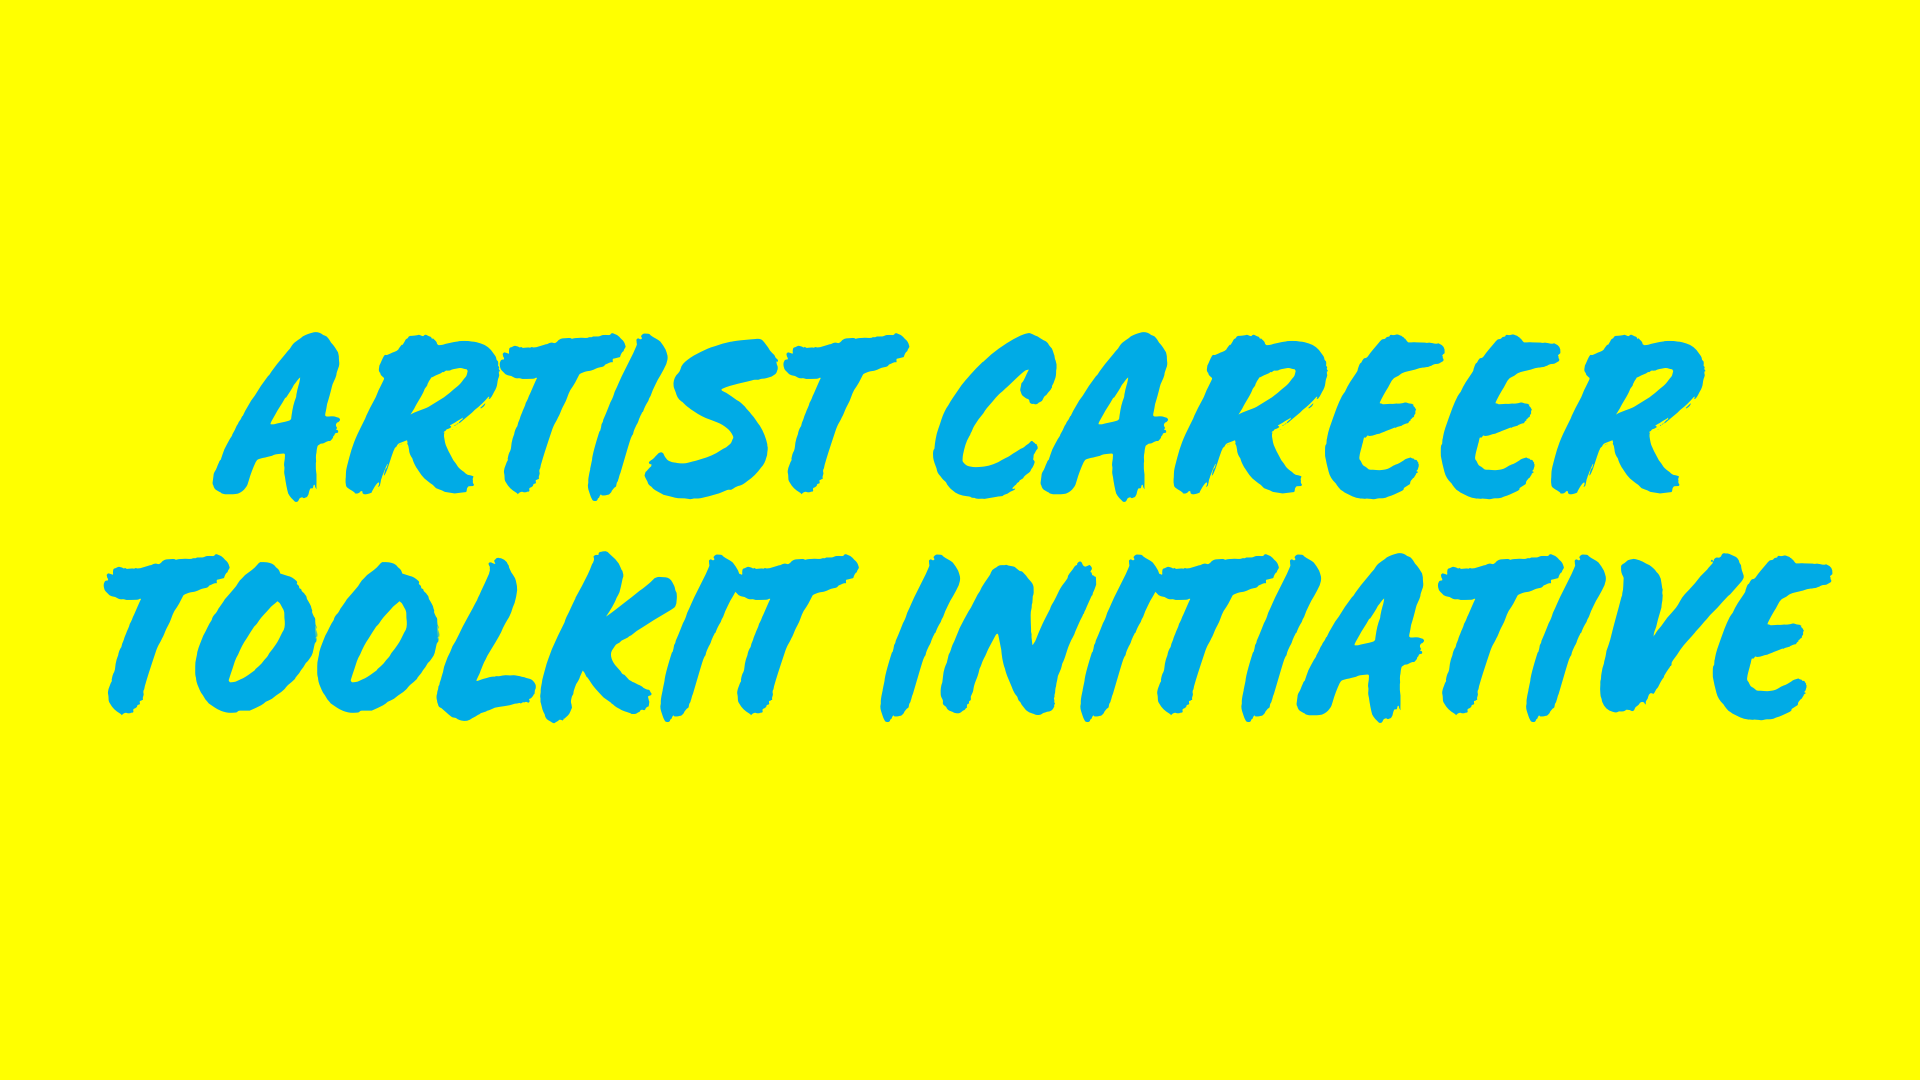 Artist Career Toolkit Initiative